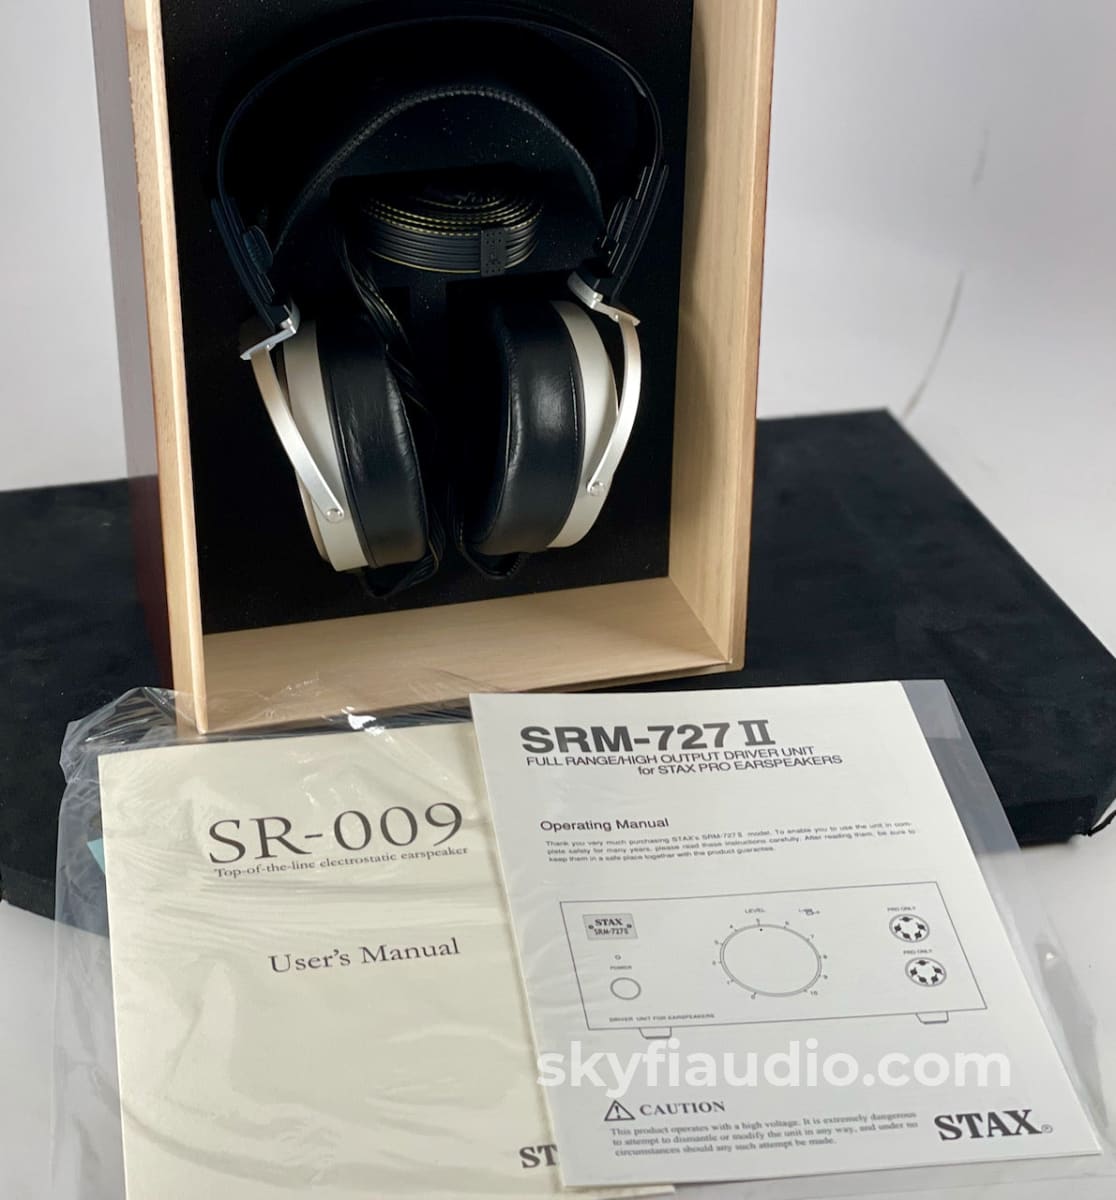 Woo Audio 3Es Elite Headphone Amplifier W/Massive Upgrades And Stax Sr-009 Headphones